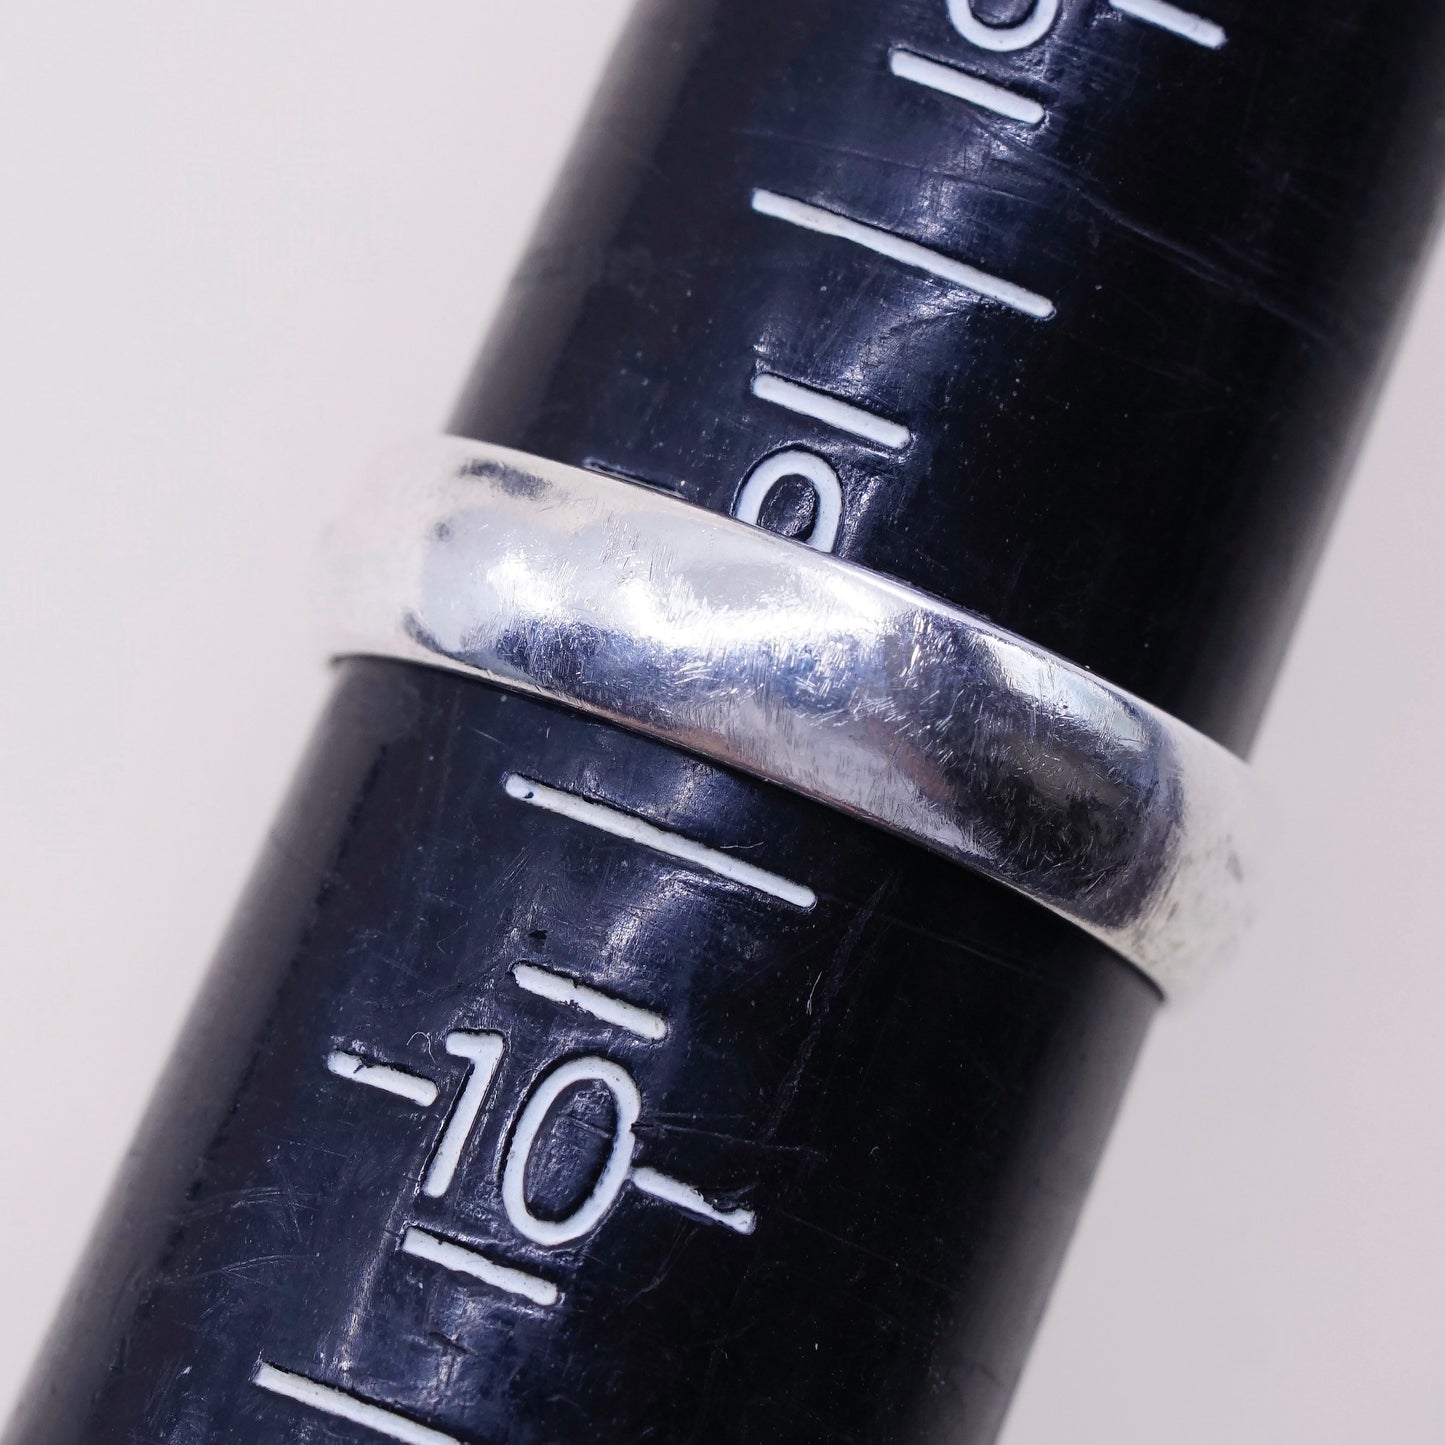 sz 9, vtg BCD sterling silver handmade ring, 925 prayer stackable band “truth”